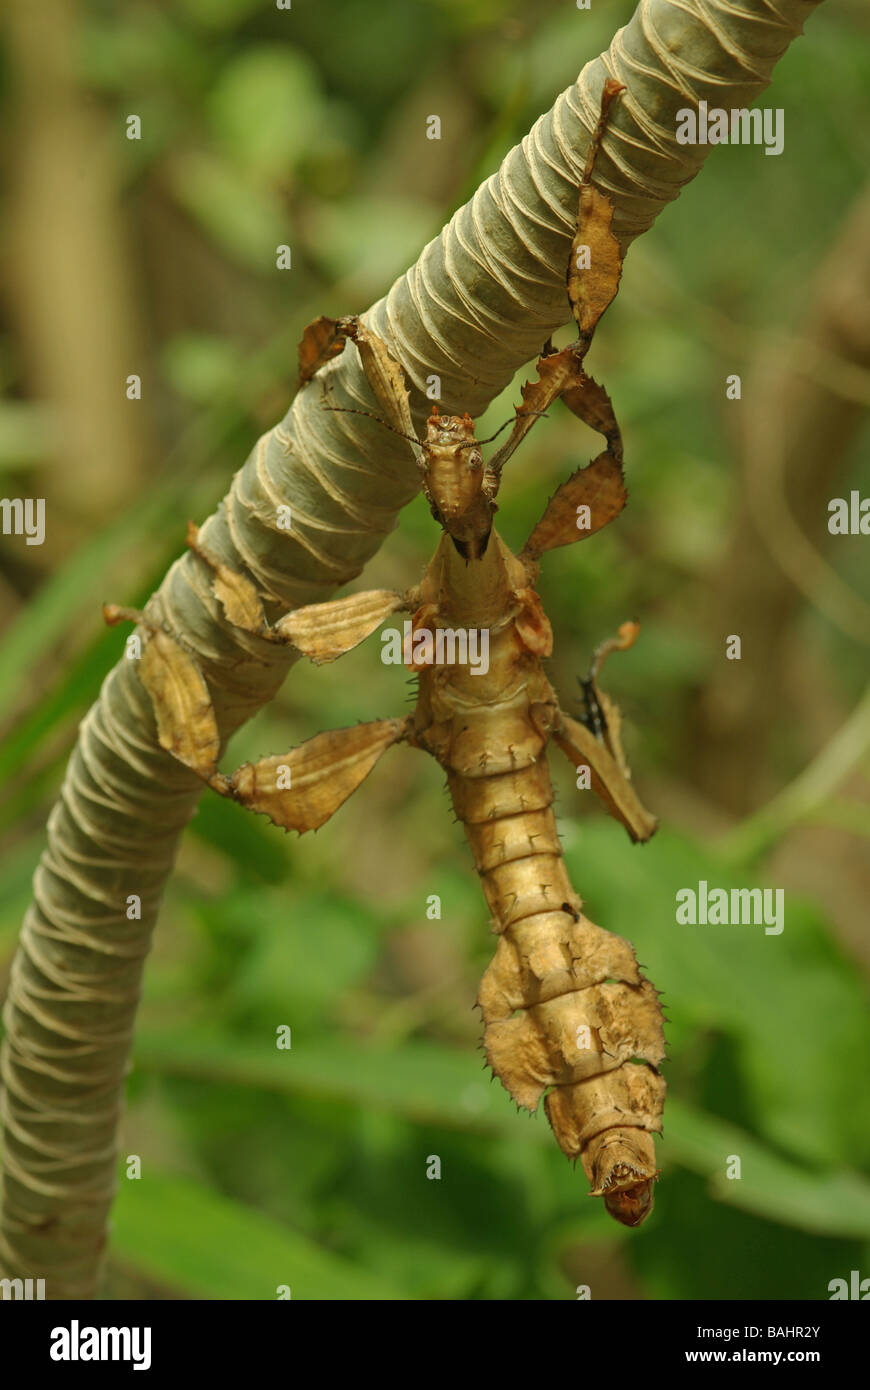 Insecto Palo espinoso australiano - Extatosoma tiaratum Foto de stock